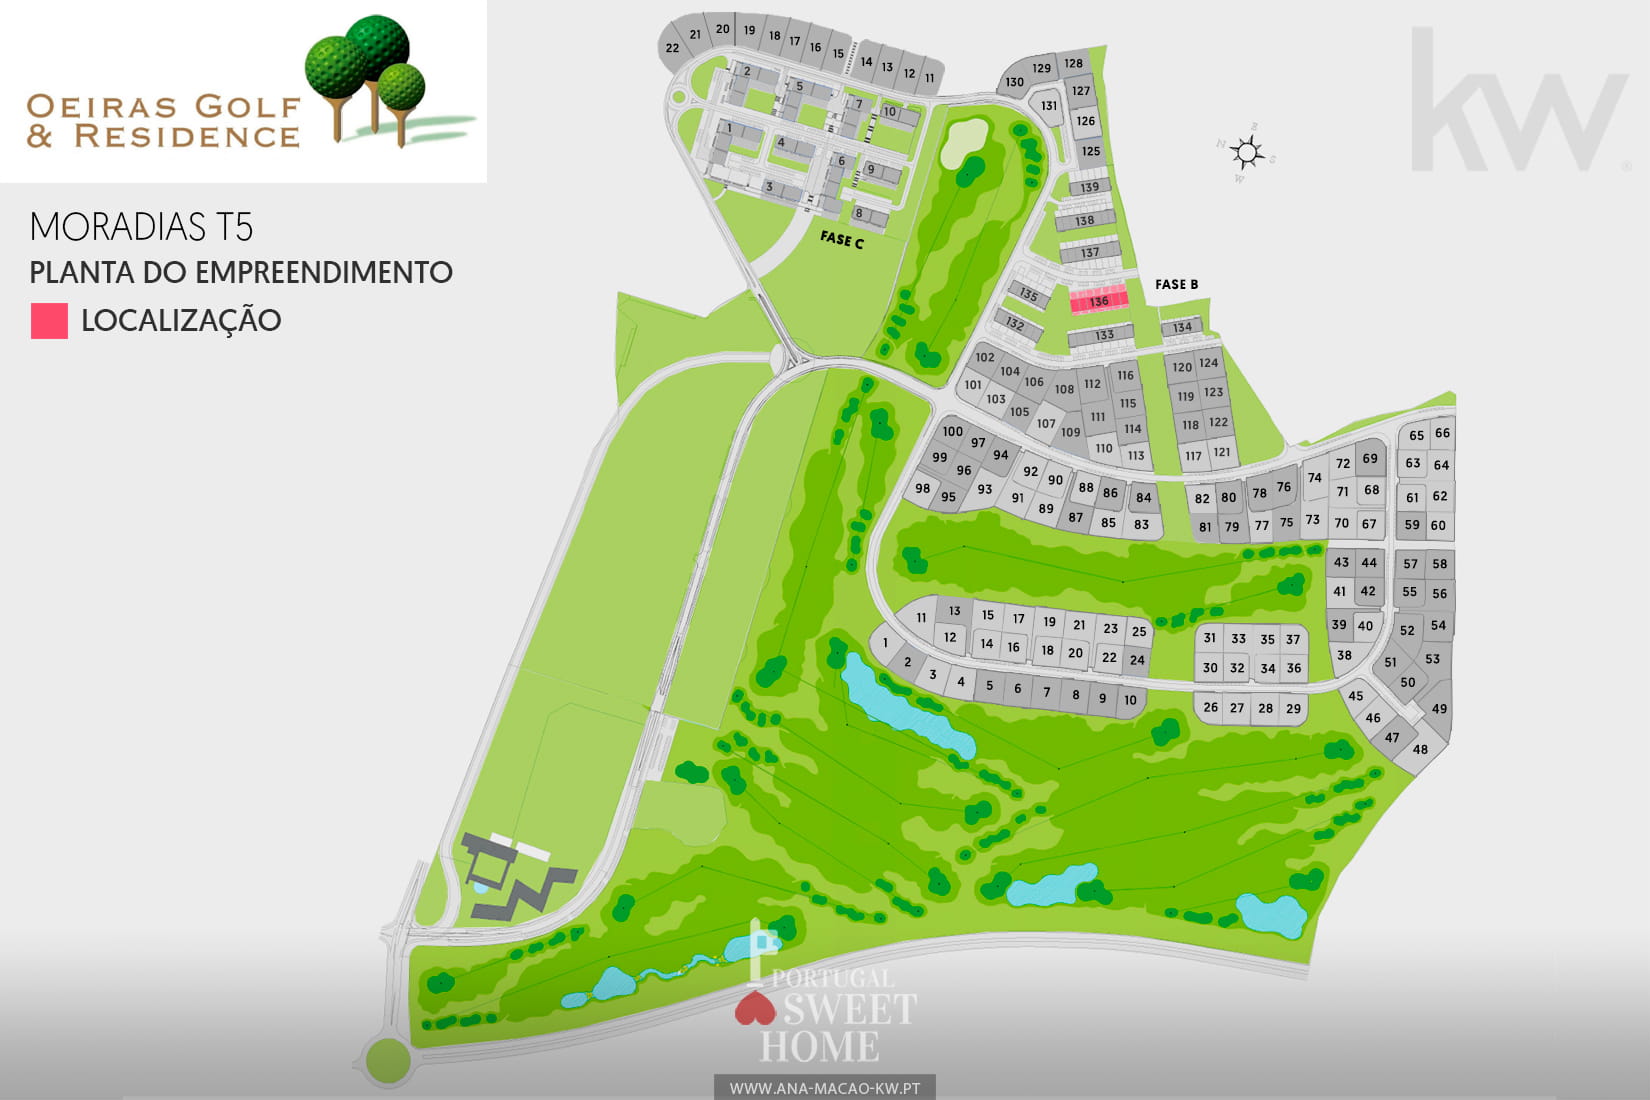 Plan of Oeiras Golf & Residence